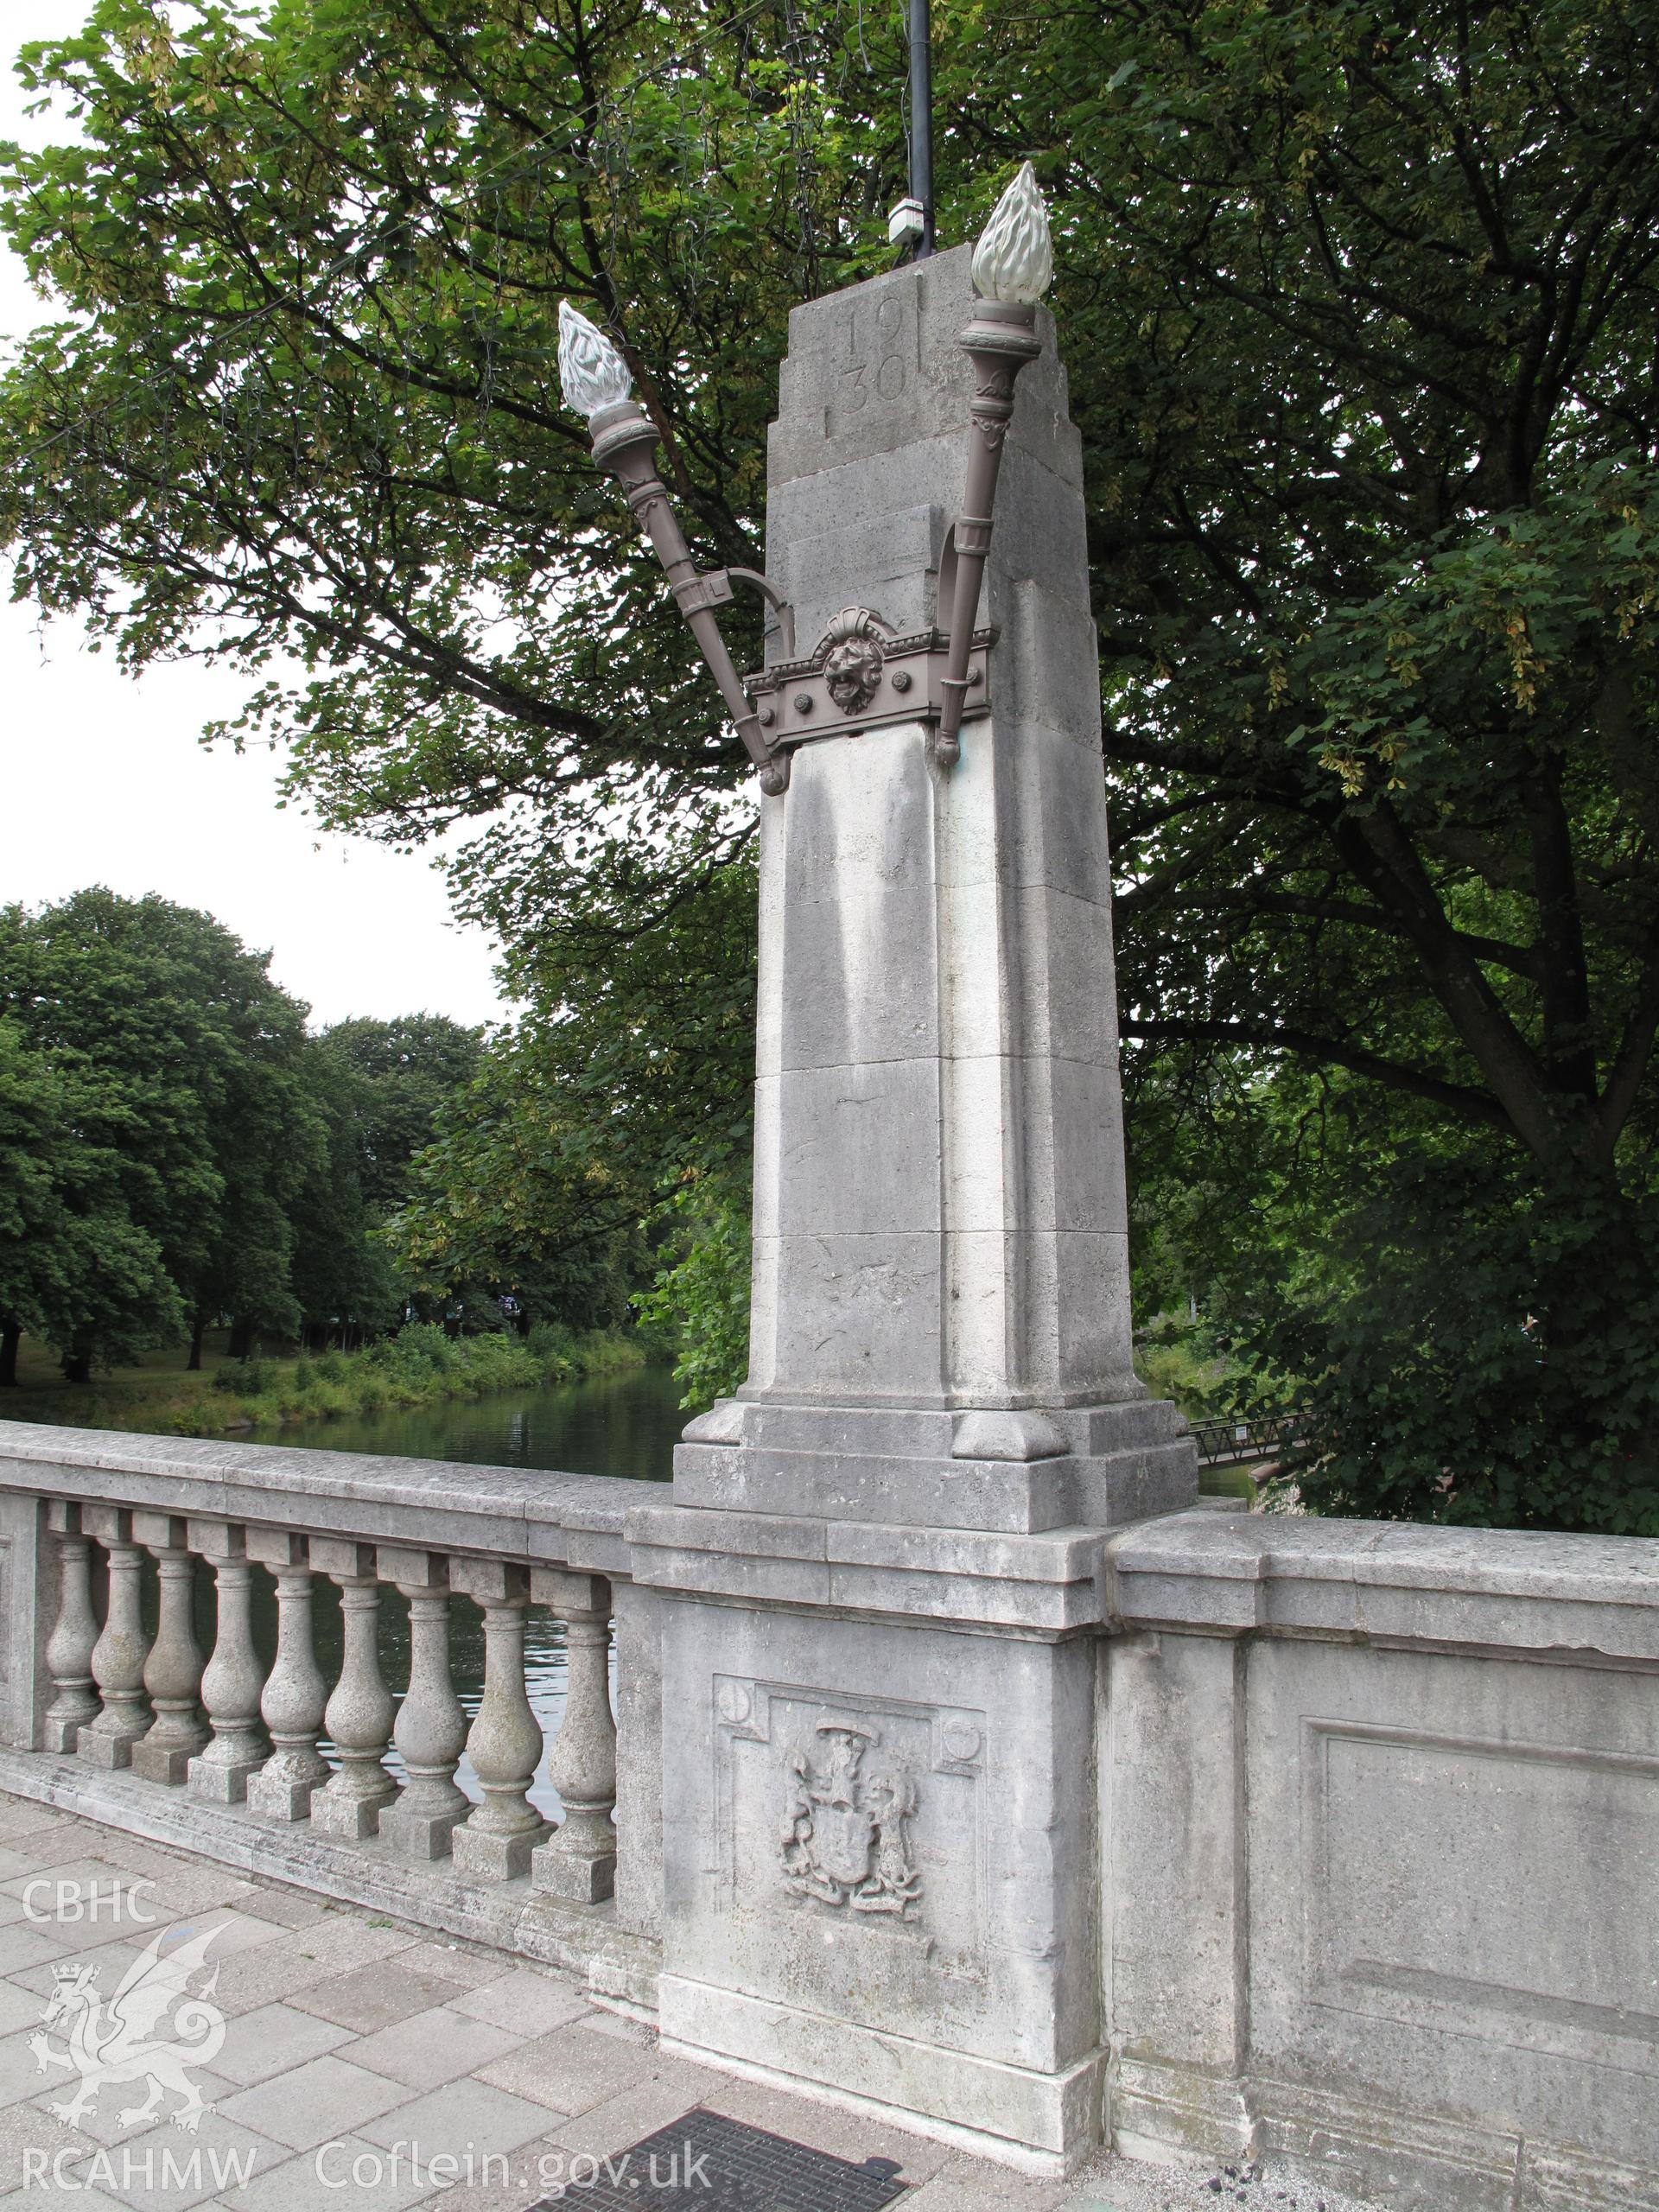 Detail of stone lamp pillar on north side of Cardiff Bridge.